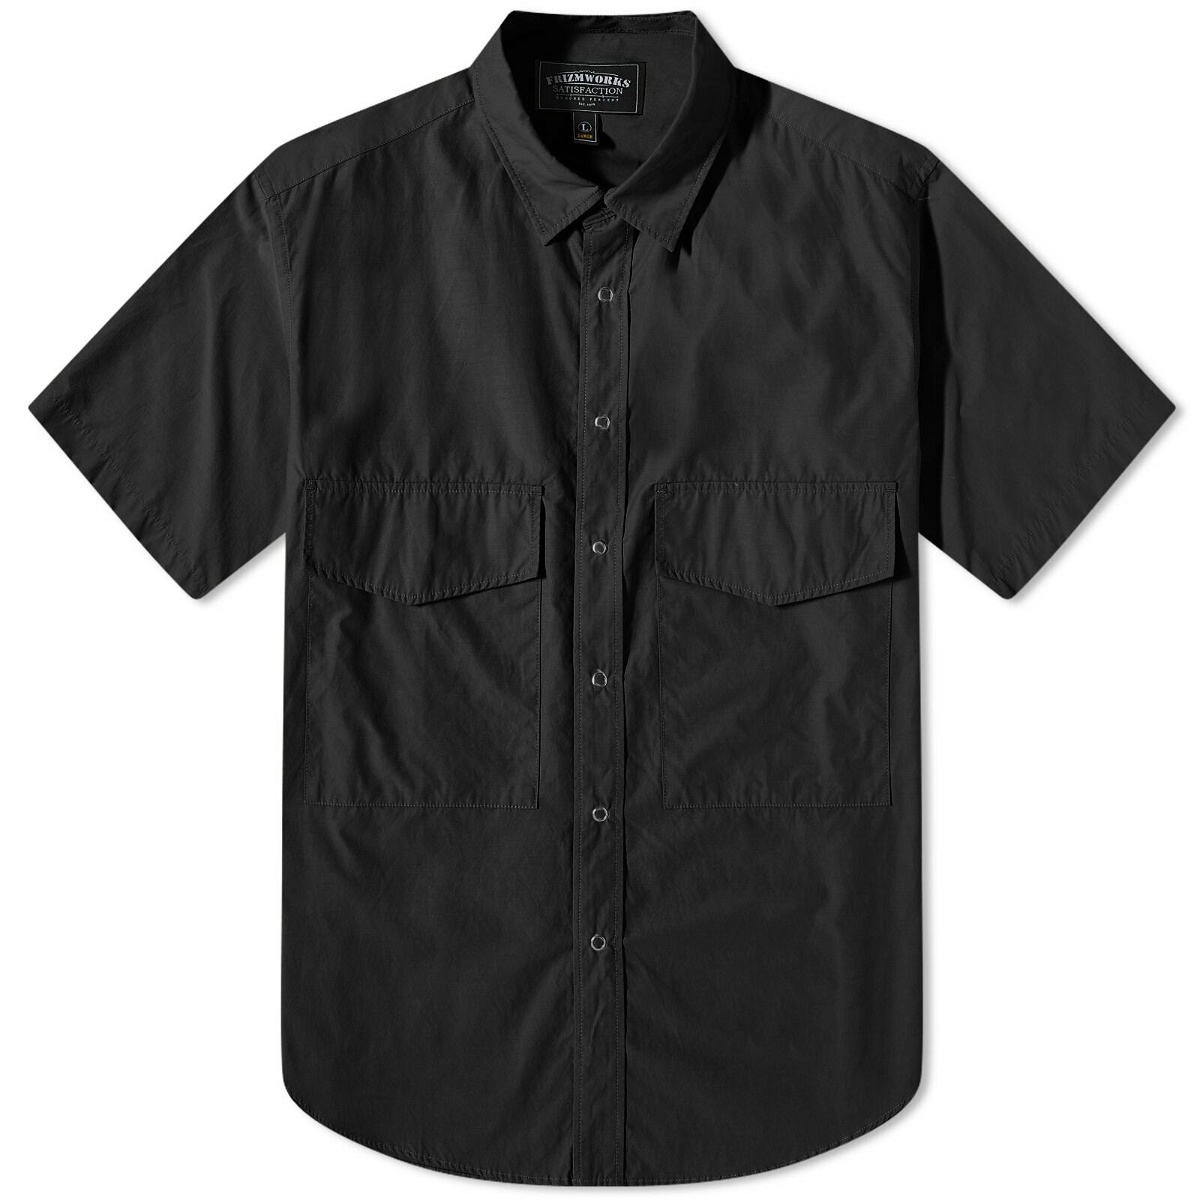 FrizmWORKS Men's Double Pocket Short Sleeve Shirt in Black FrizmWORKS